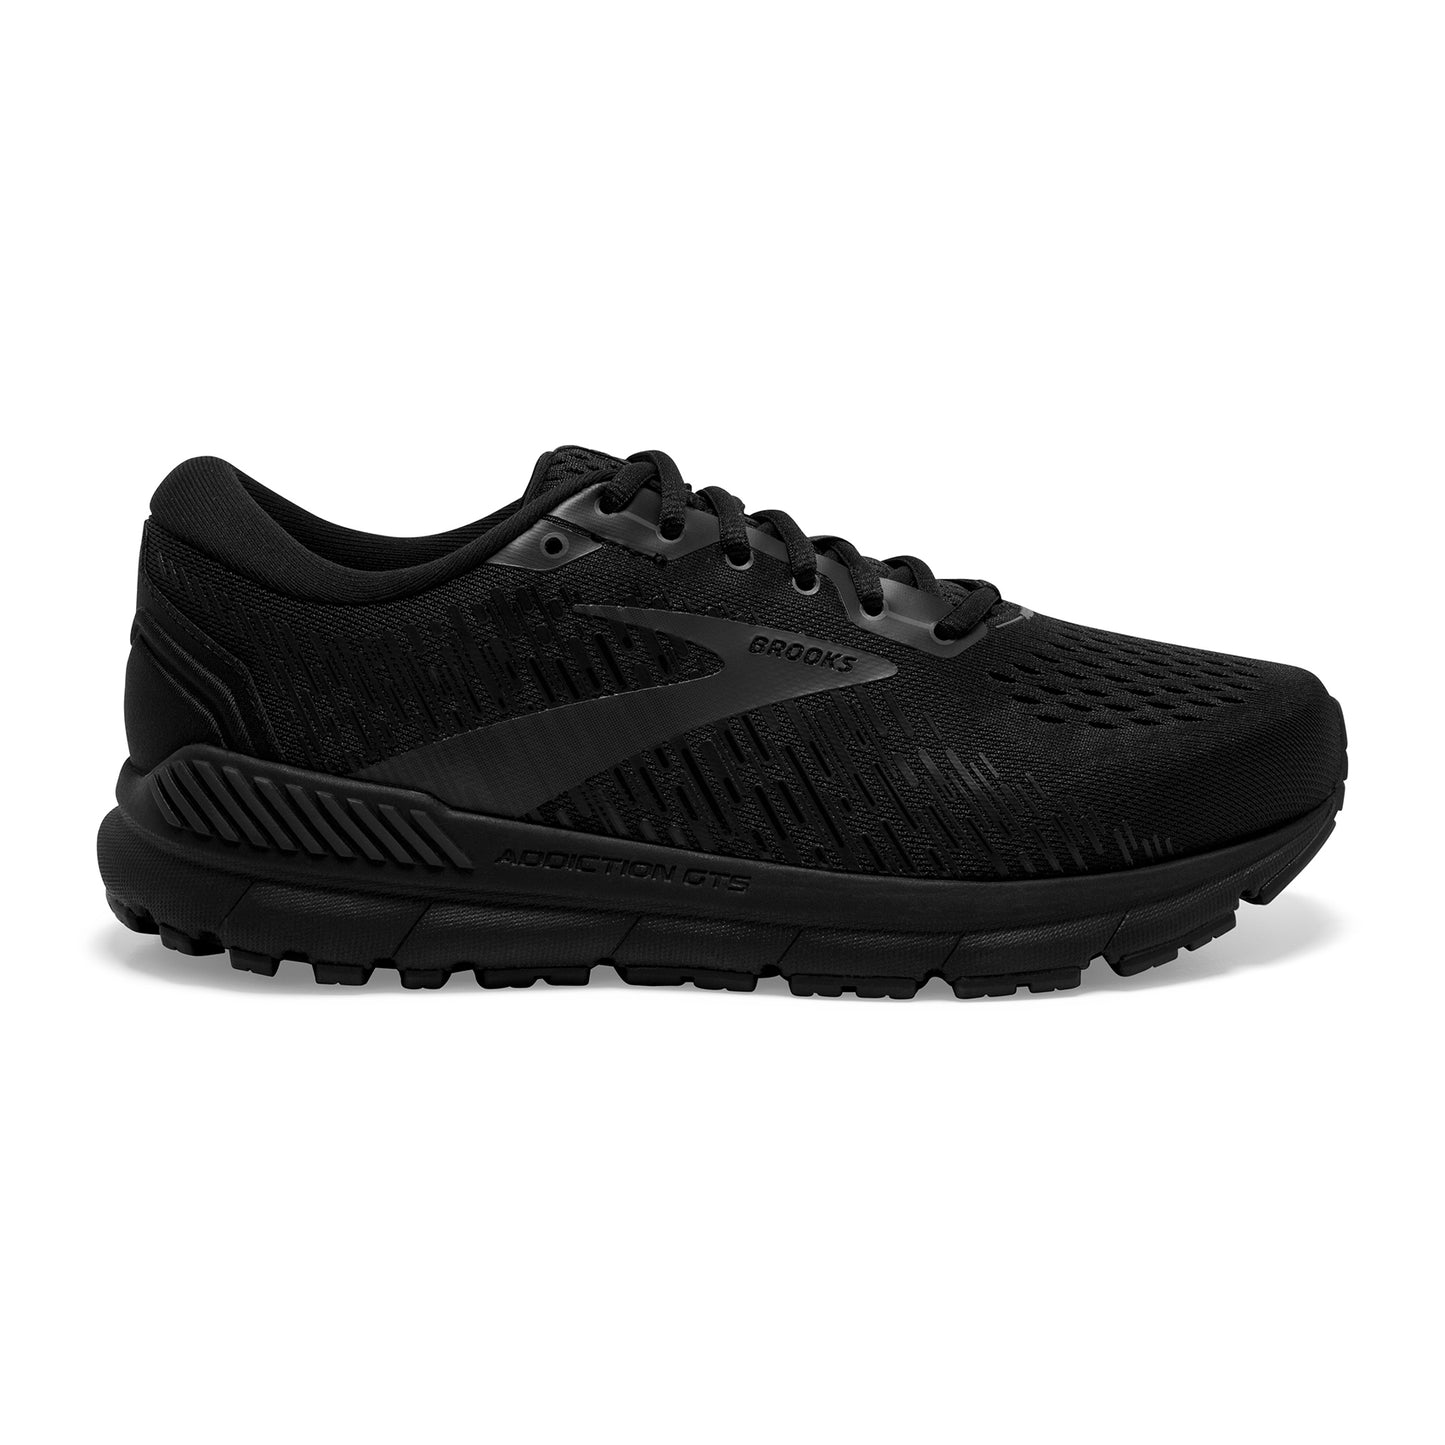 Men's Addiction GTS 15 Running Shoe - Black/Black/Ebony - Regular (D)